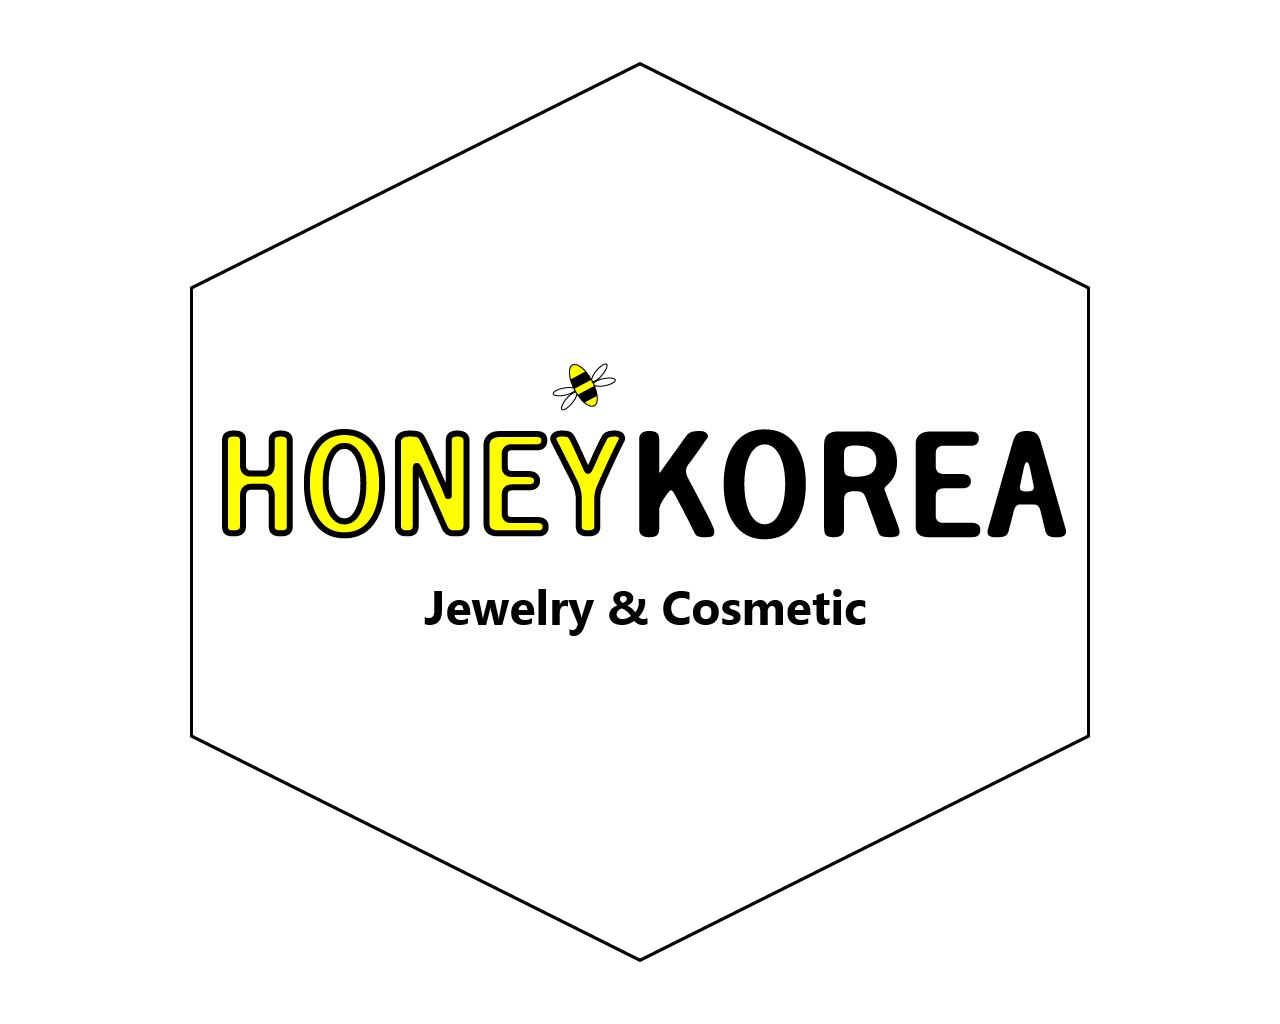 HONEY KOREA